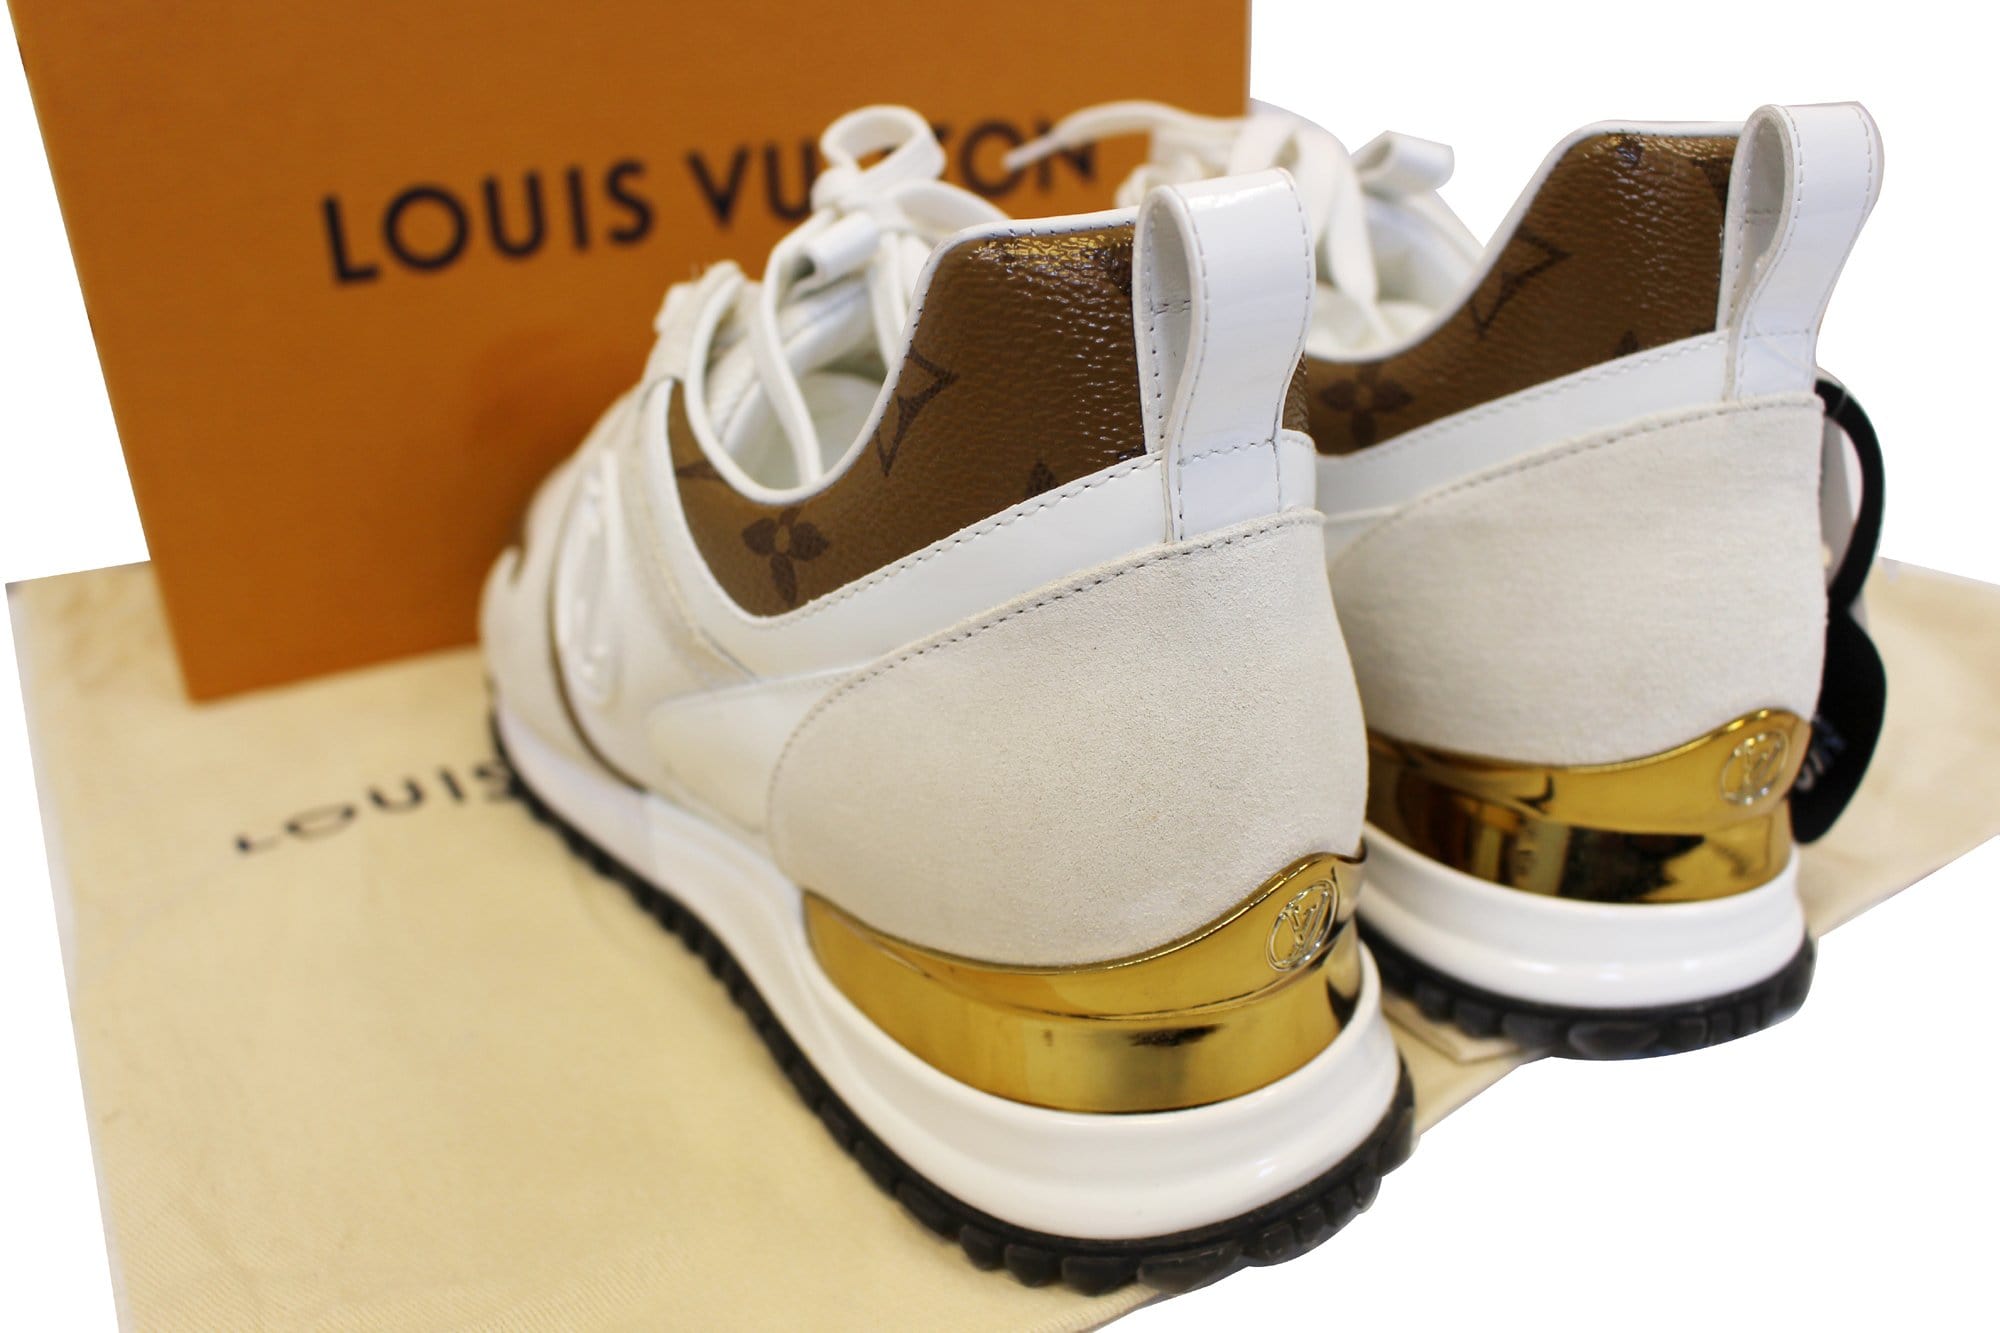 Louis Vuitton Run 55 Sneaker Gold. Size 38.0